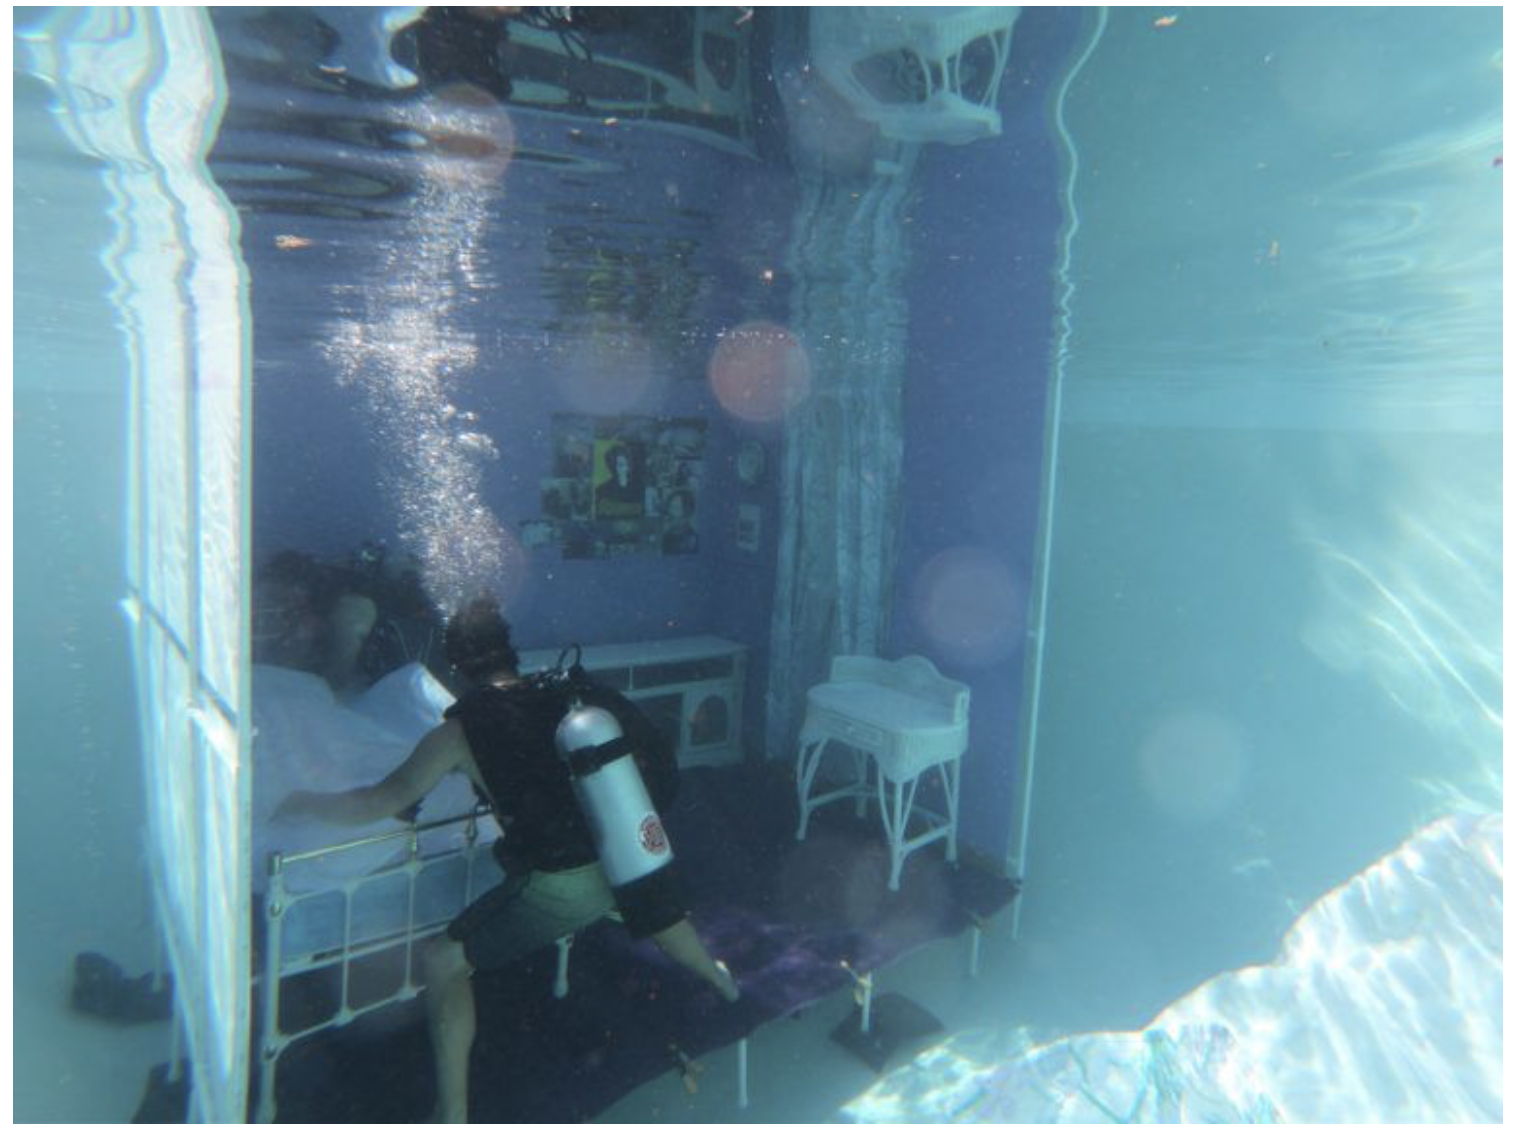 man under water scuba gear setting up a water photoshoot